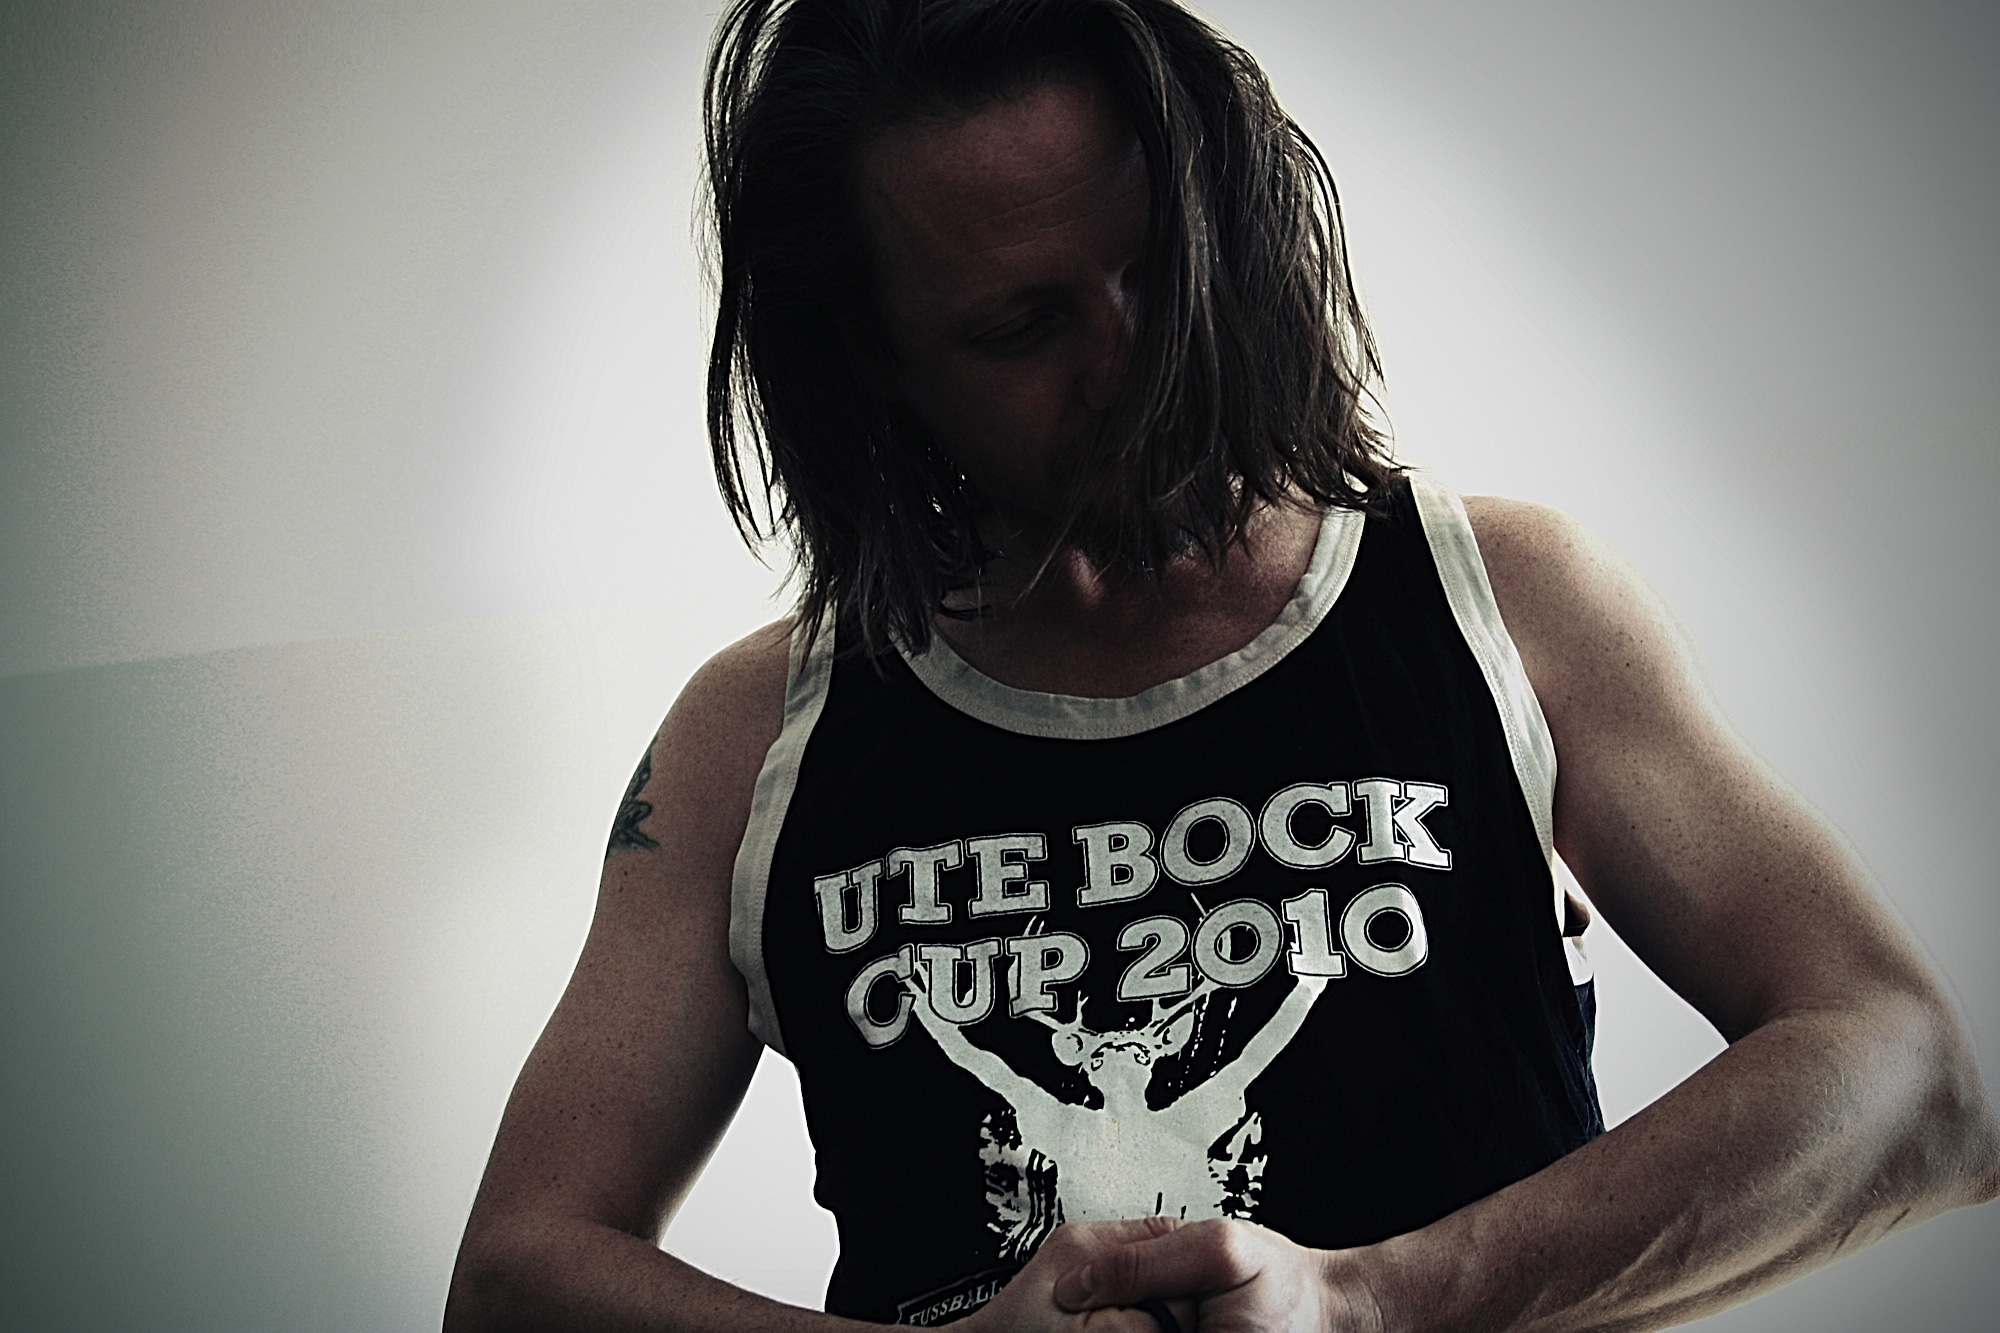 Ute Bock Cup - The Wrestler